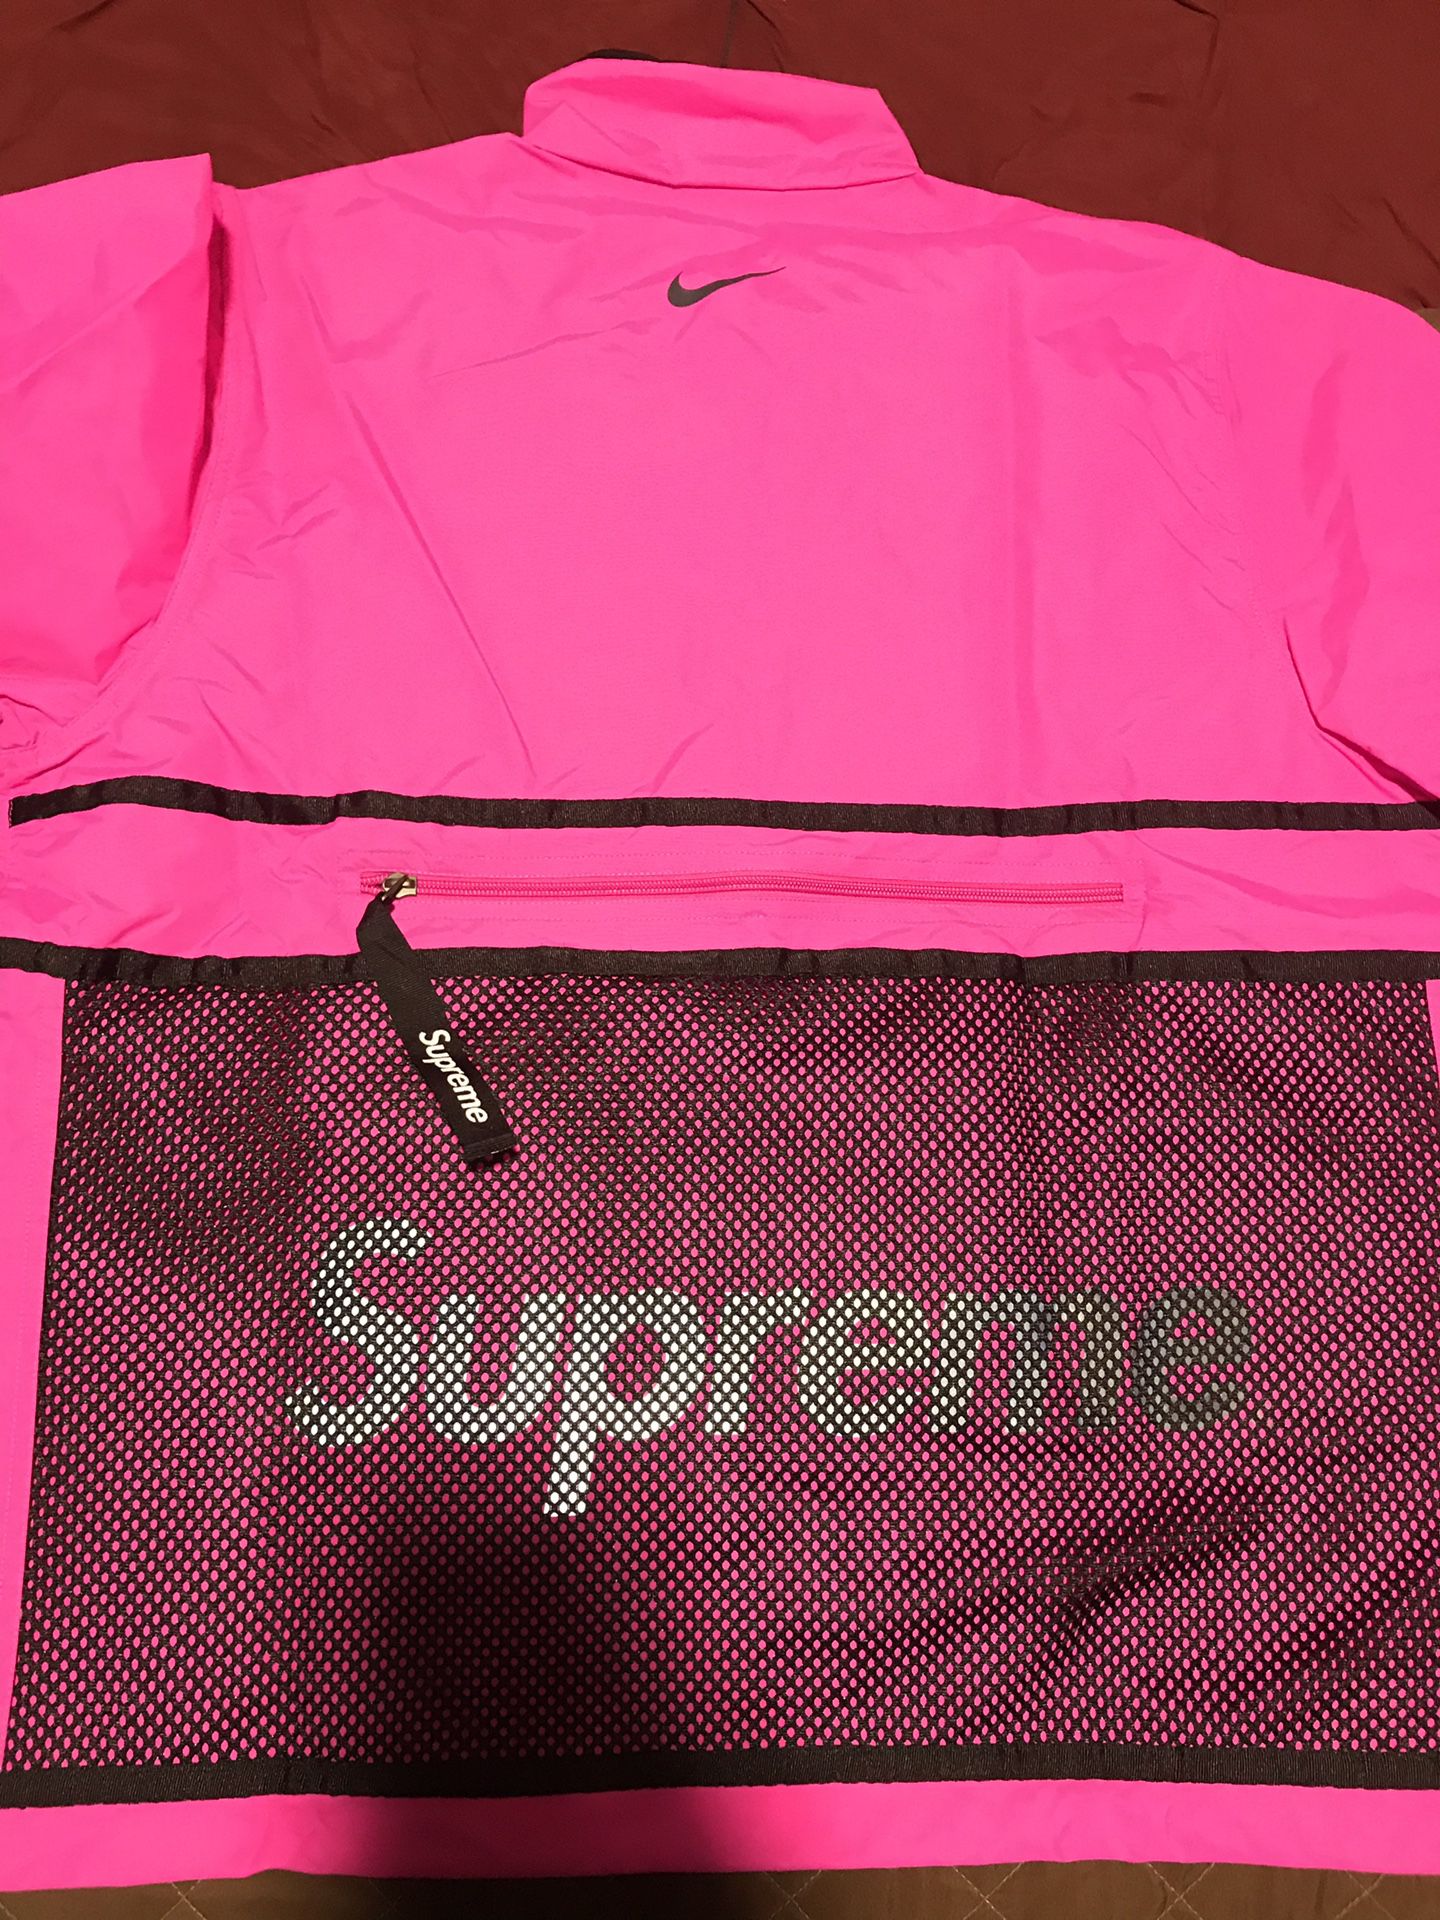 Nike supreme trail running jacket size large brand new